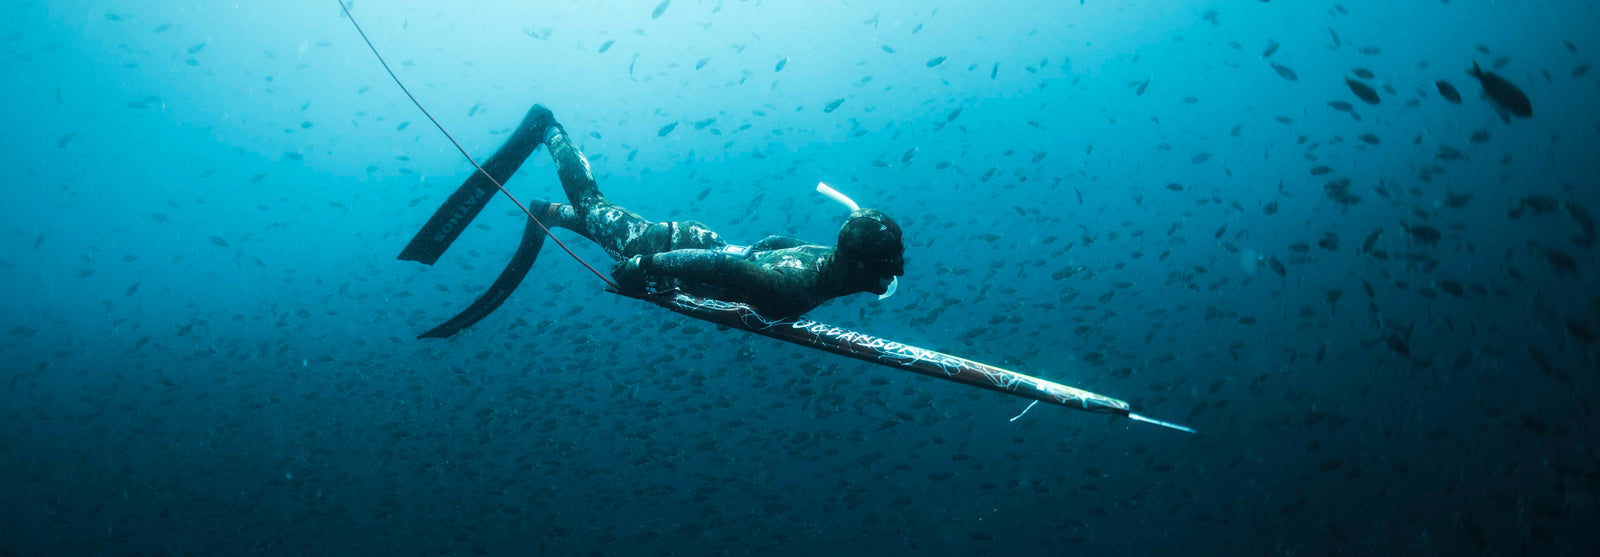 Spearfishing Gear: The Essential Freediving & Spearfishing Equipment